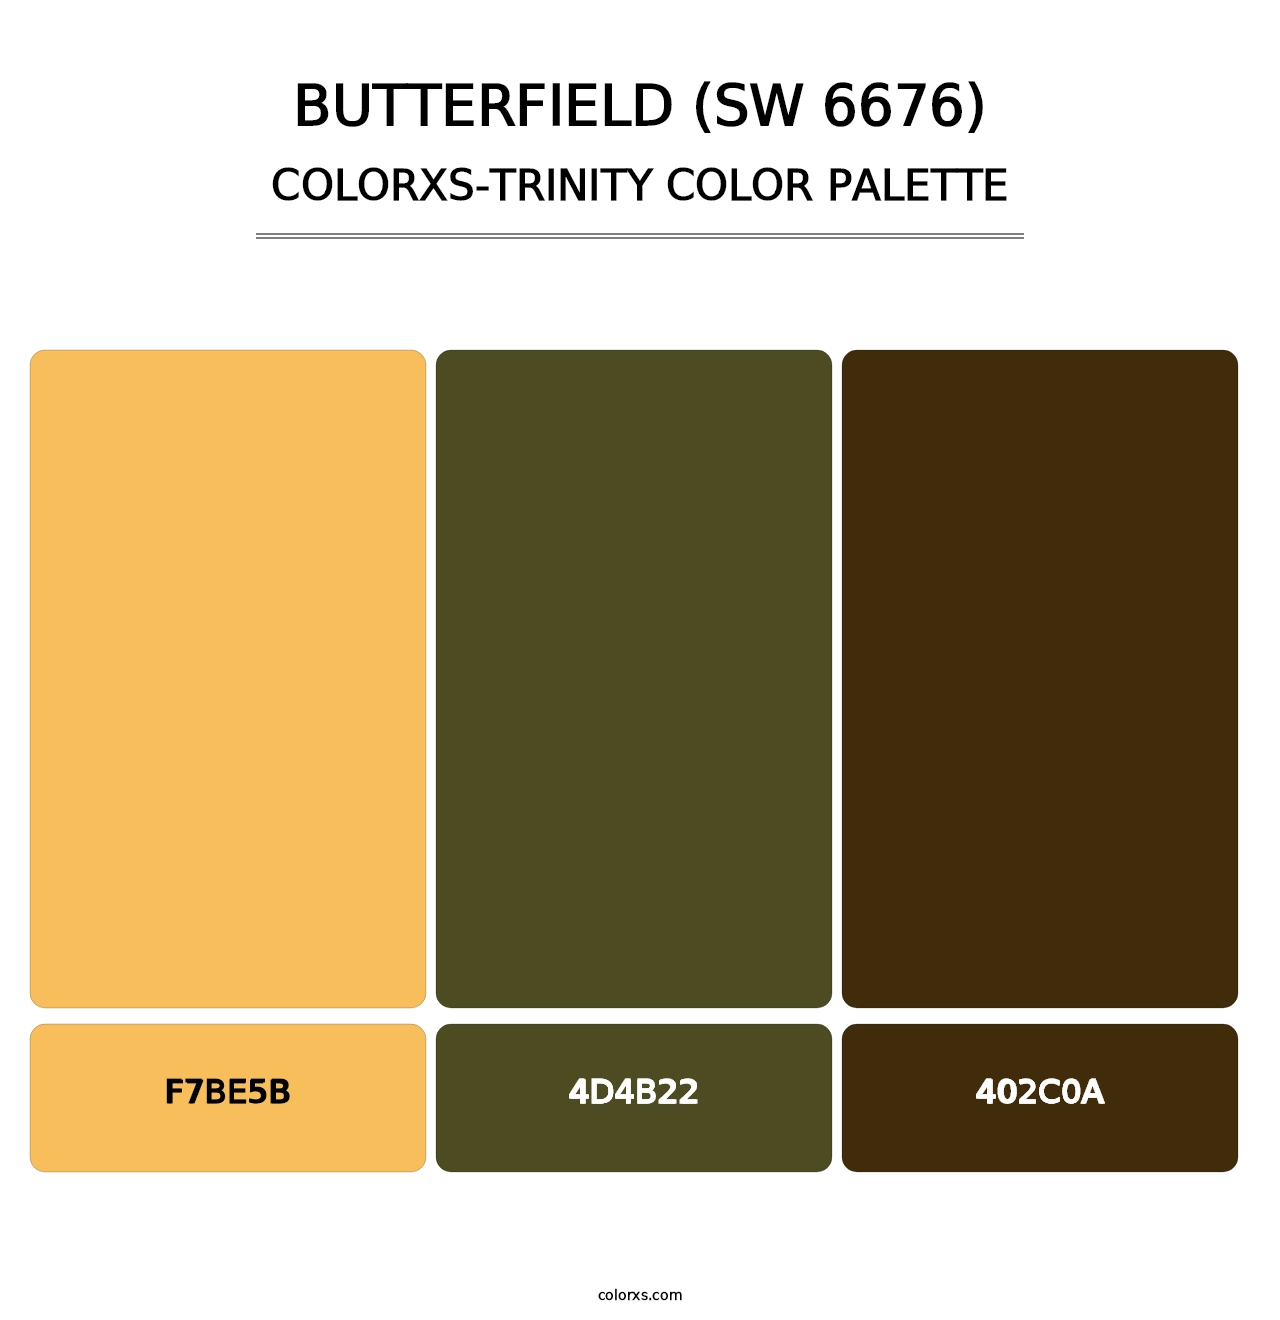 Butterfield (SW 6676) - Colorxs Trinity Palette